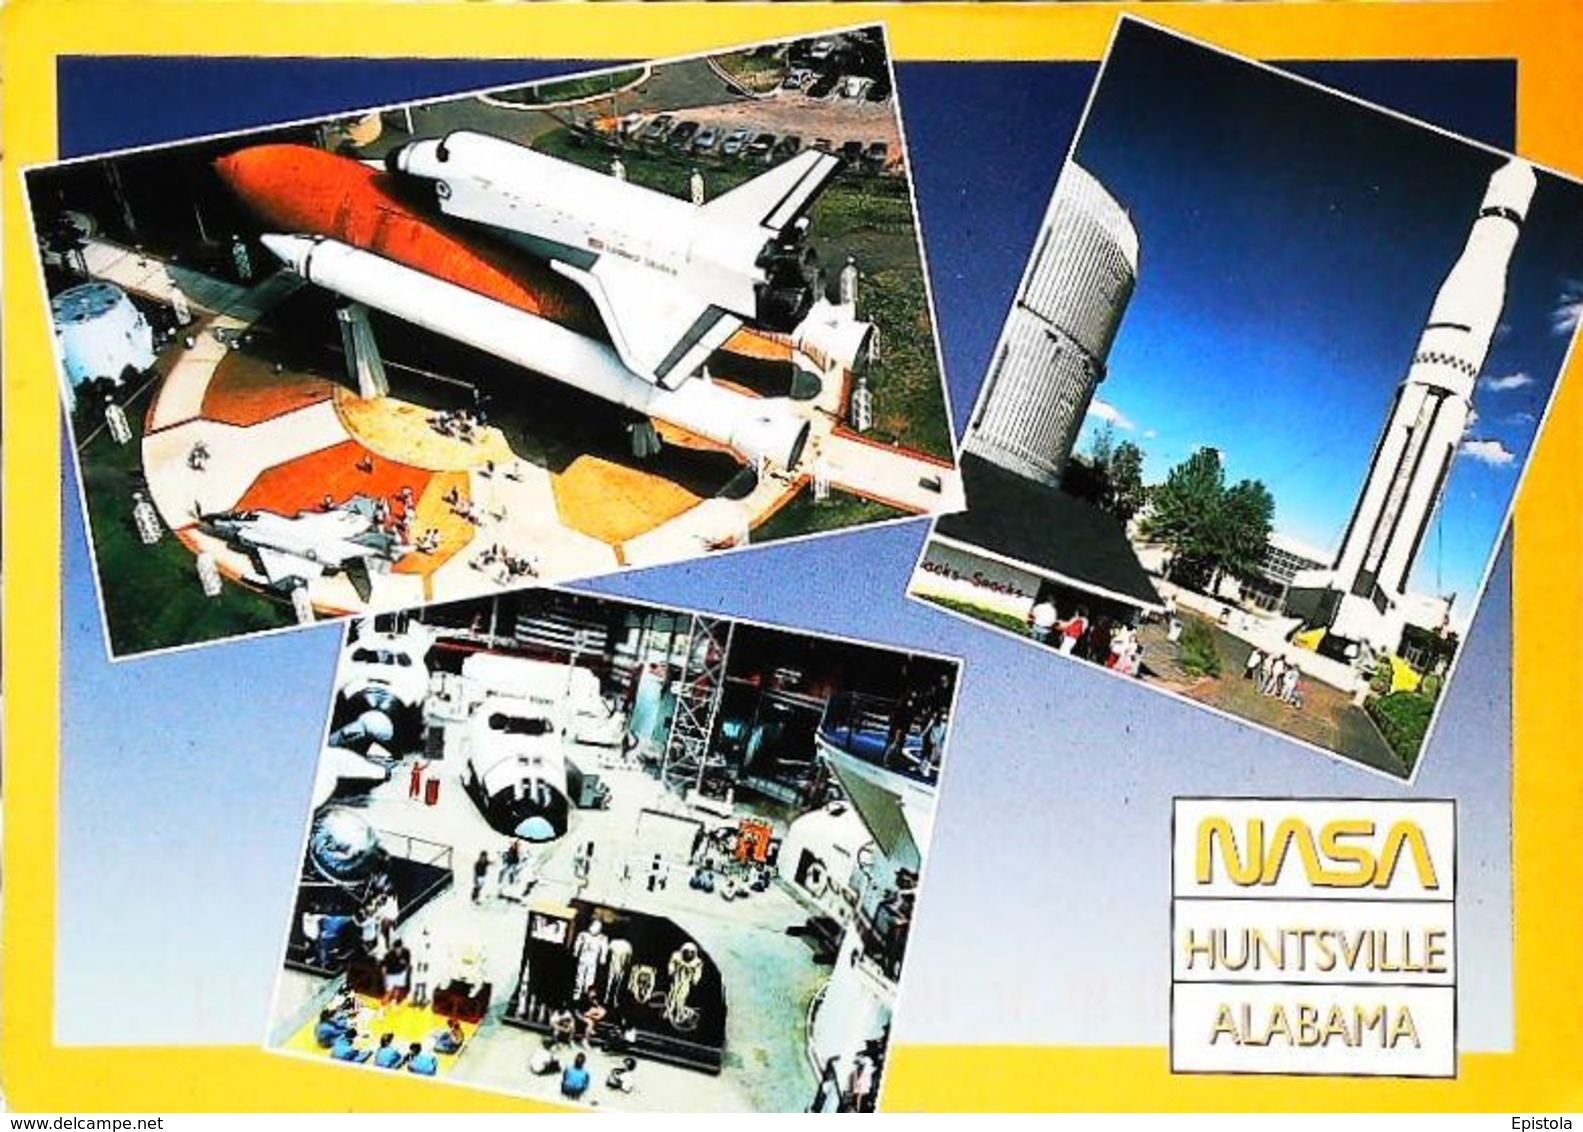 2009 - HUNTSVILLE ALABAMA - NASA - Huntsville